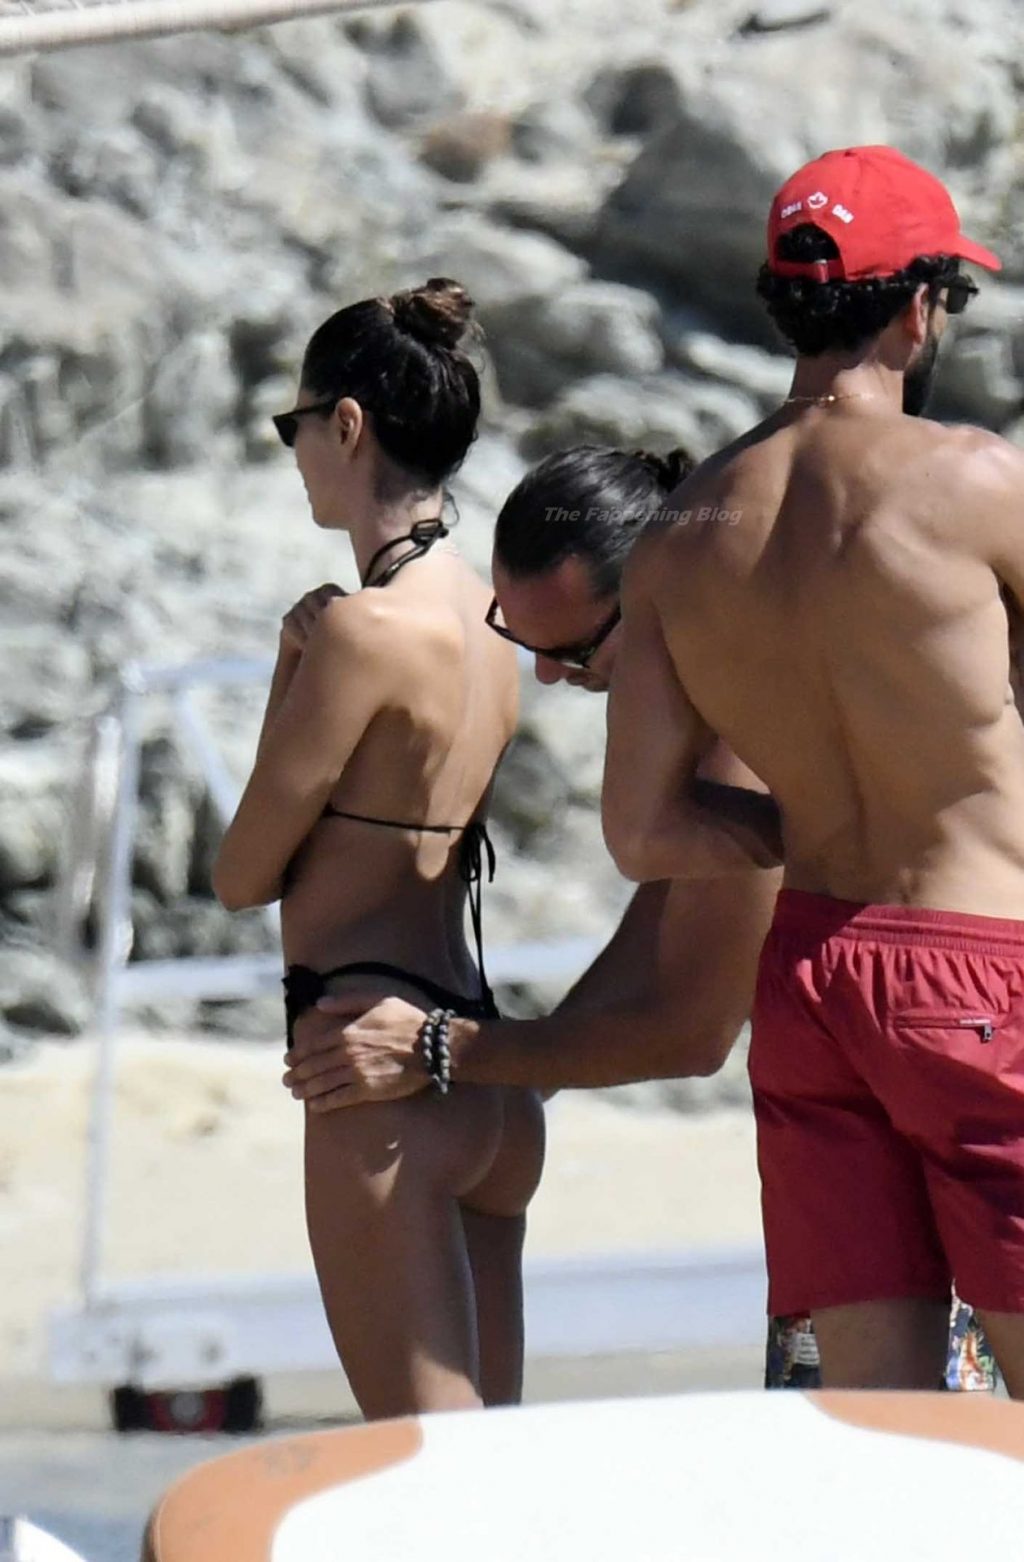 Anna Safroncik is Seen During Torrid Passion with her Boyfriend on the Beach in Mykonos (102 Photos)